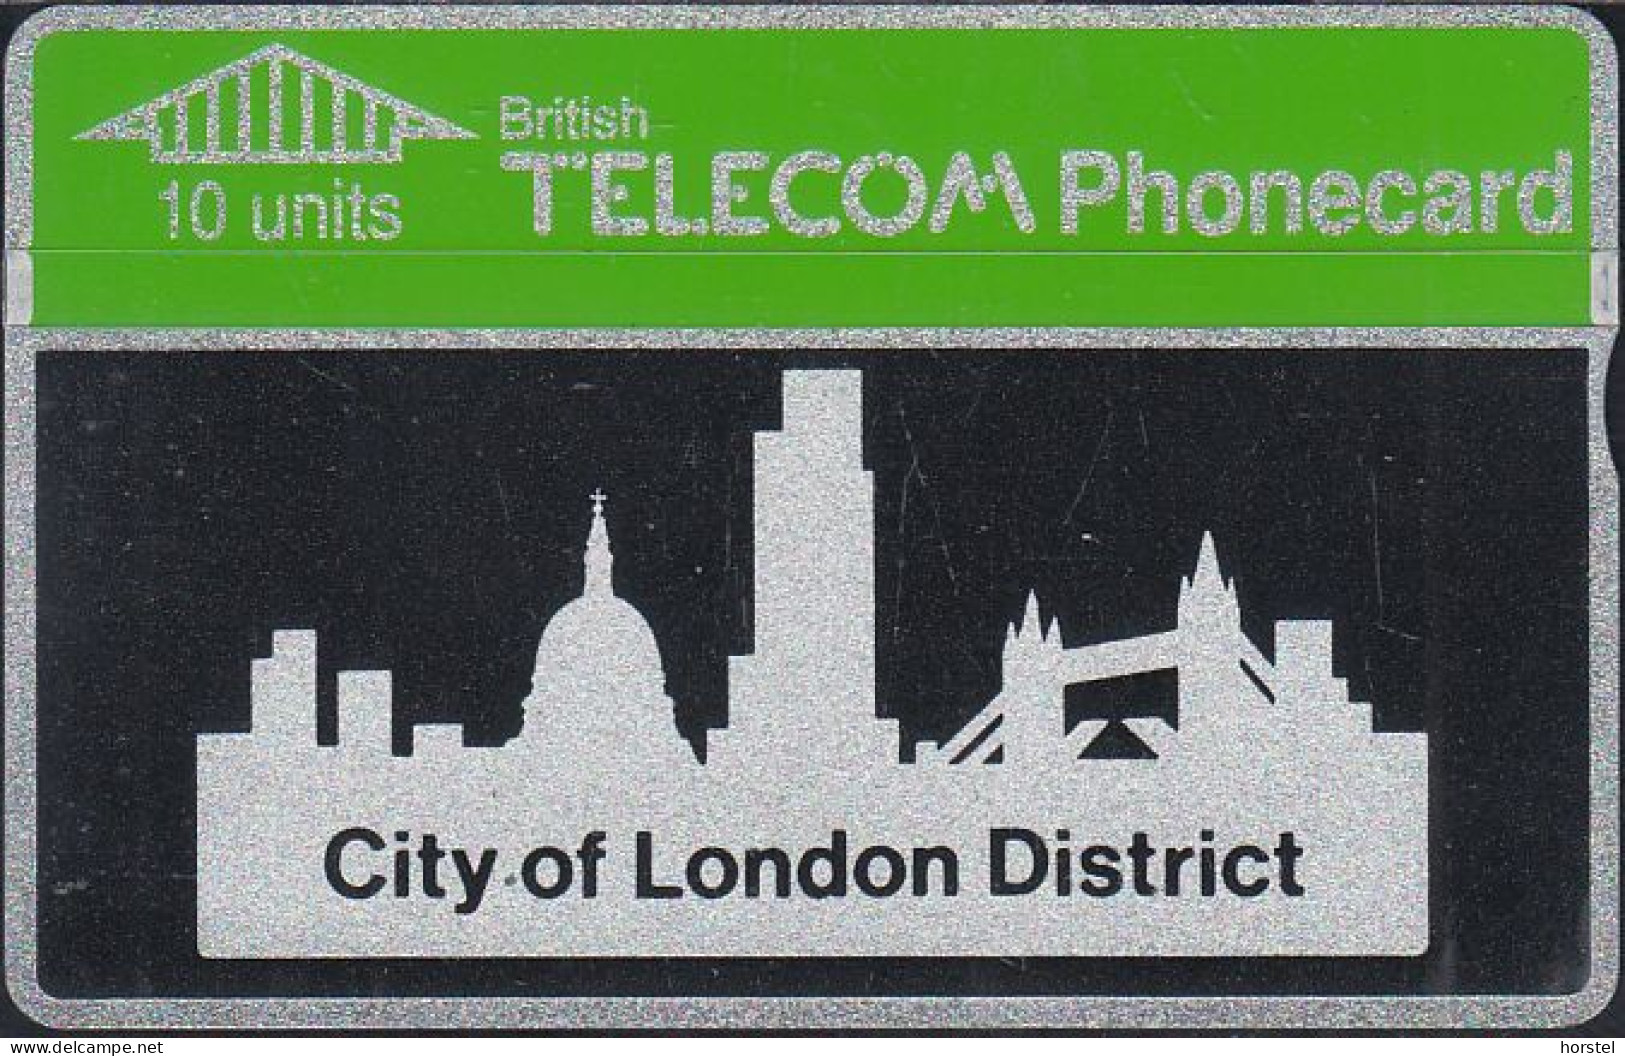 UK British Telecom Phonecard - L&G Bti 0004 - 10 Units - City Of London District - 123A - Mint - BT Internal Issues